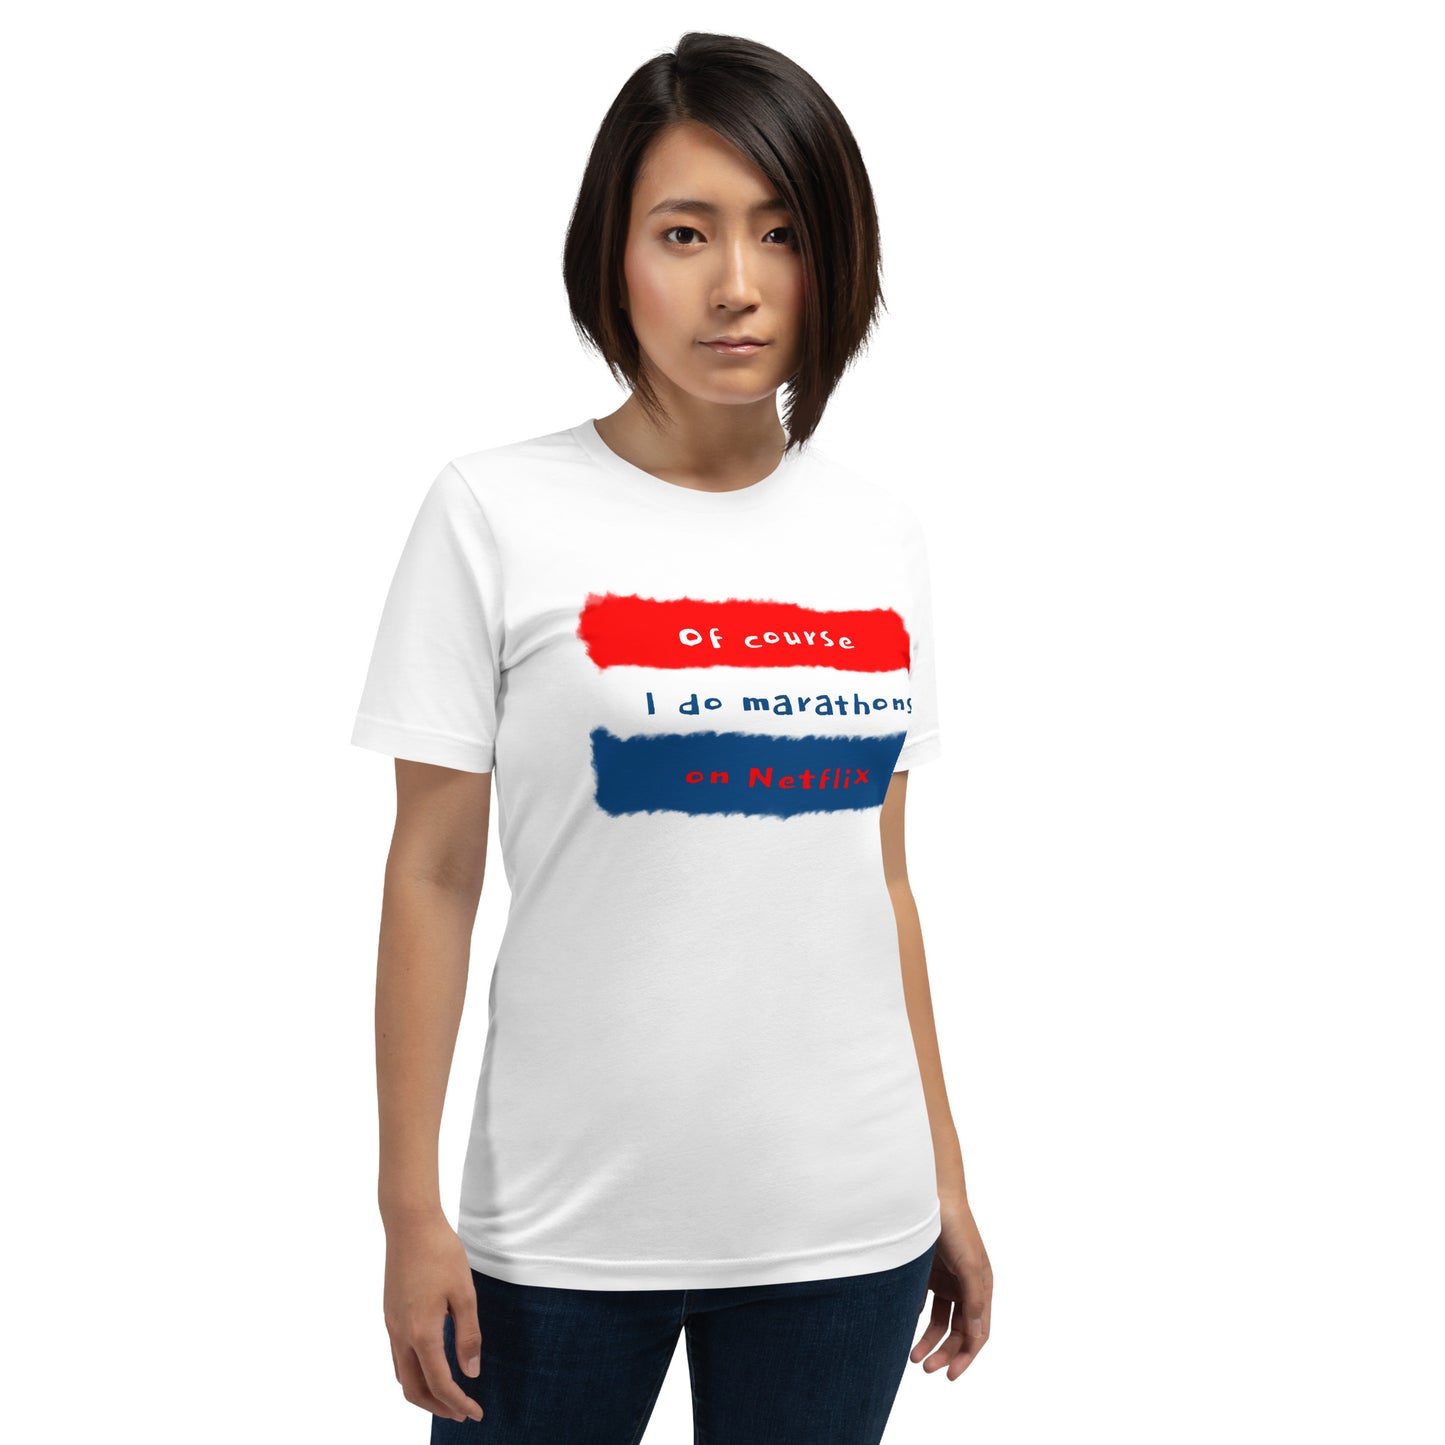 White Colors Of The Netherlands Shirt / Holland Dutch Flag Shirt / Humor Shirt